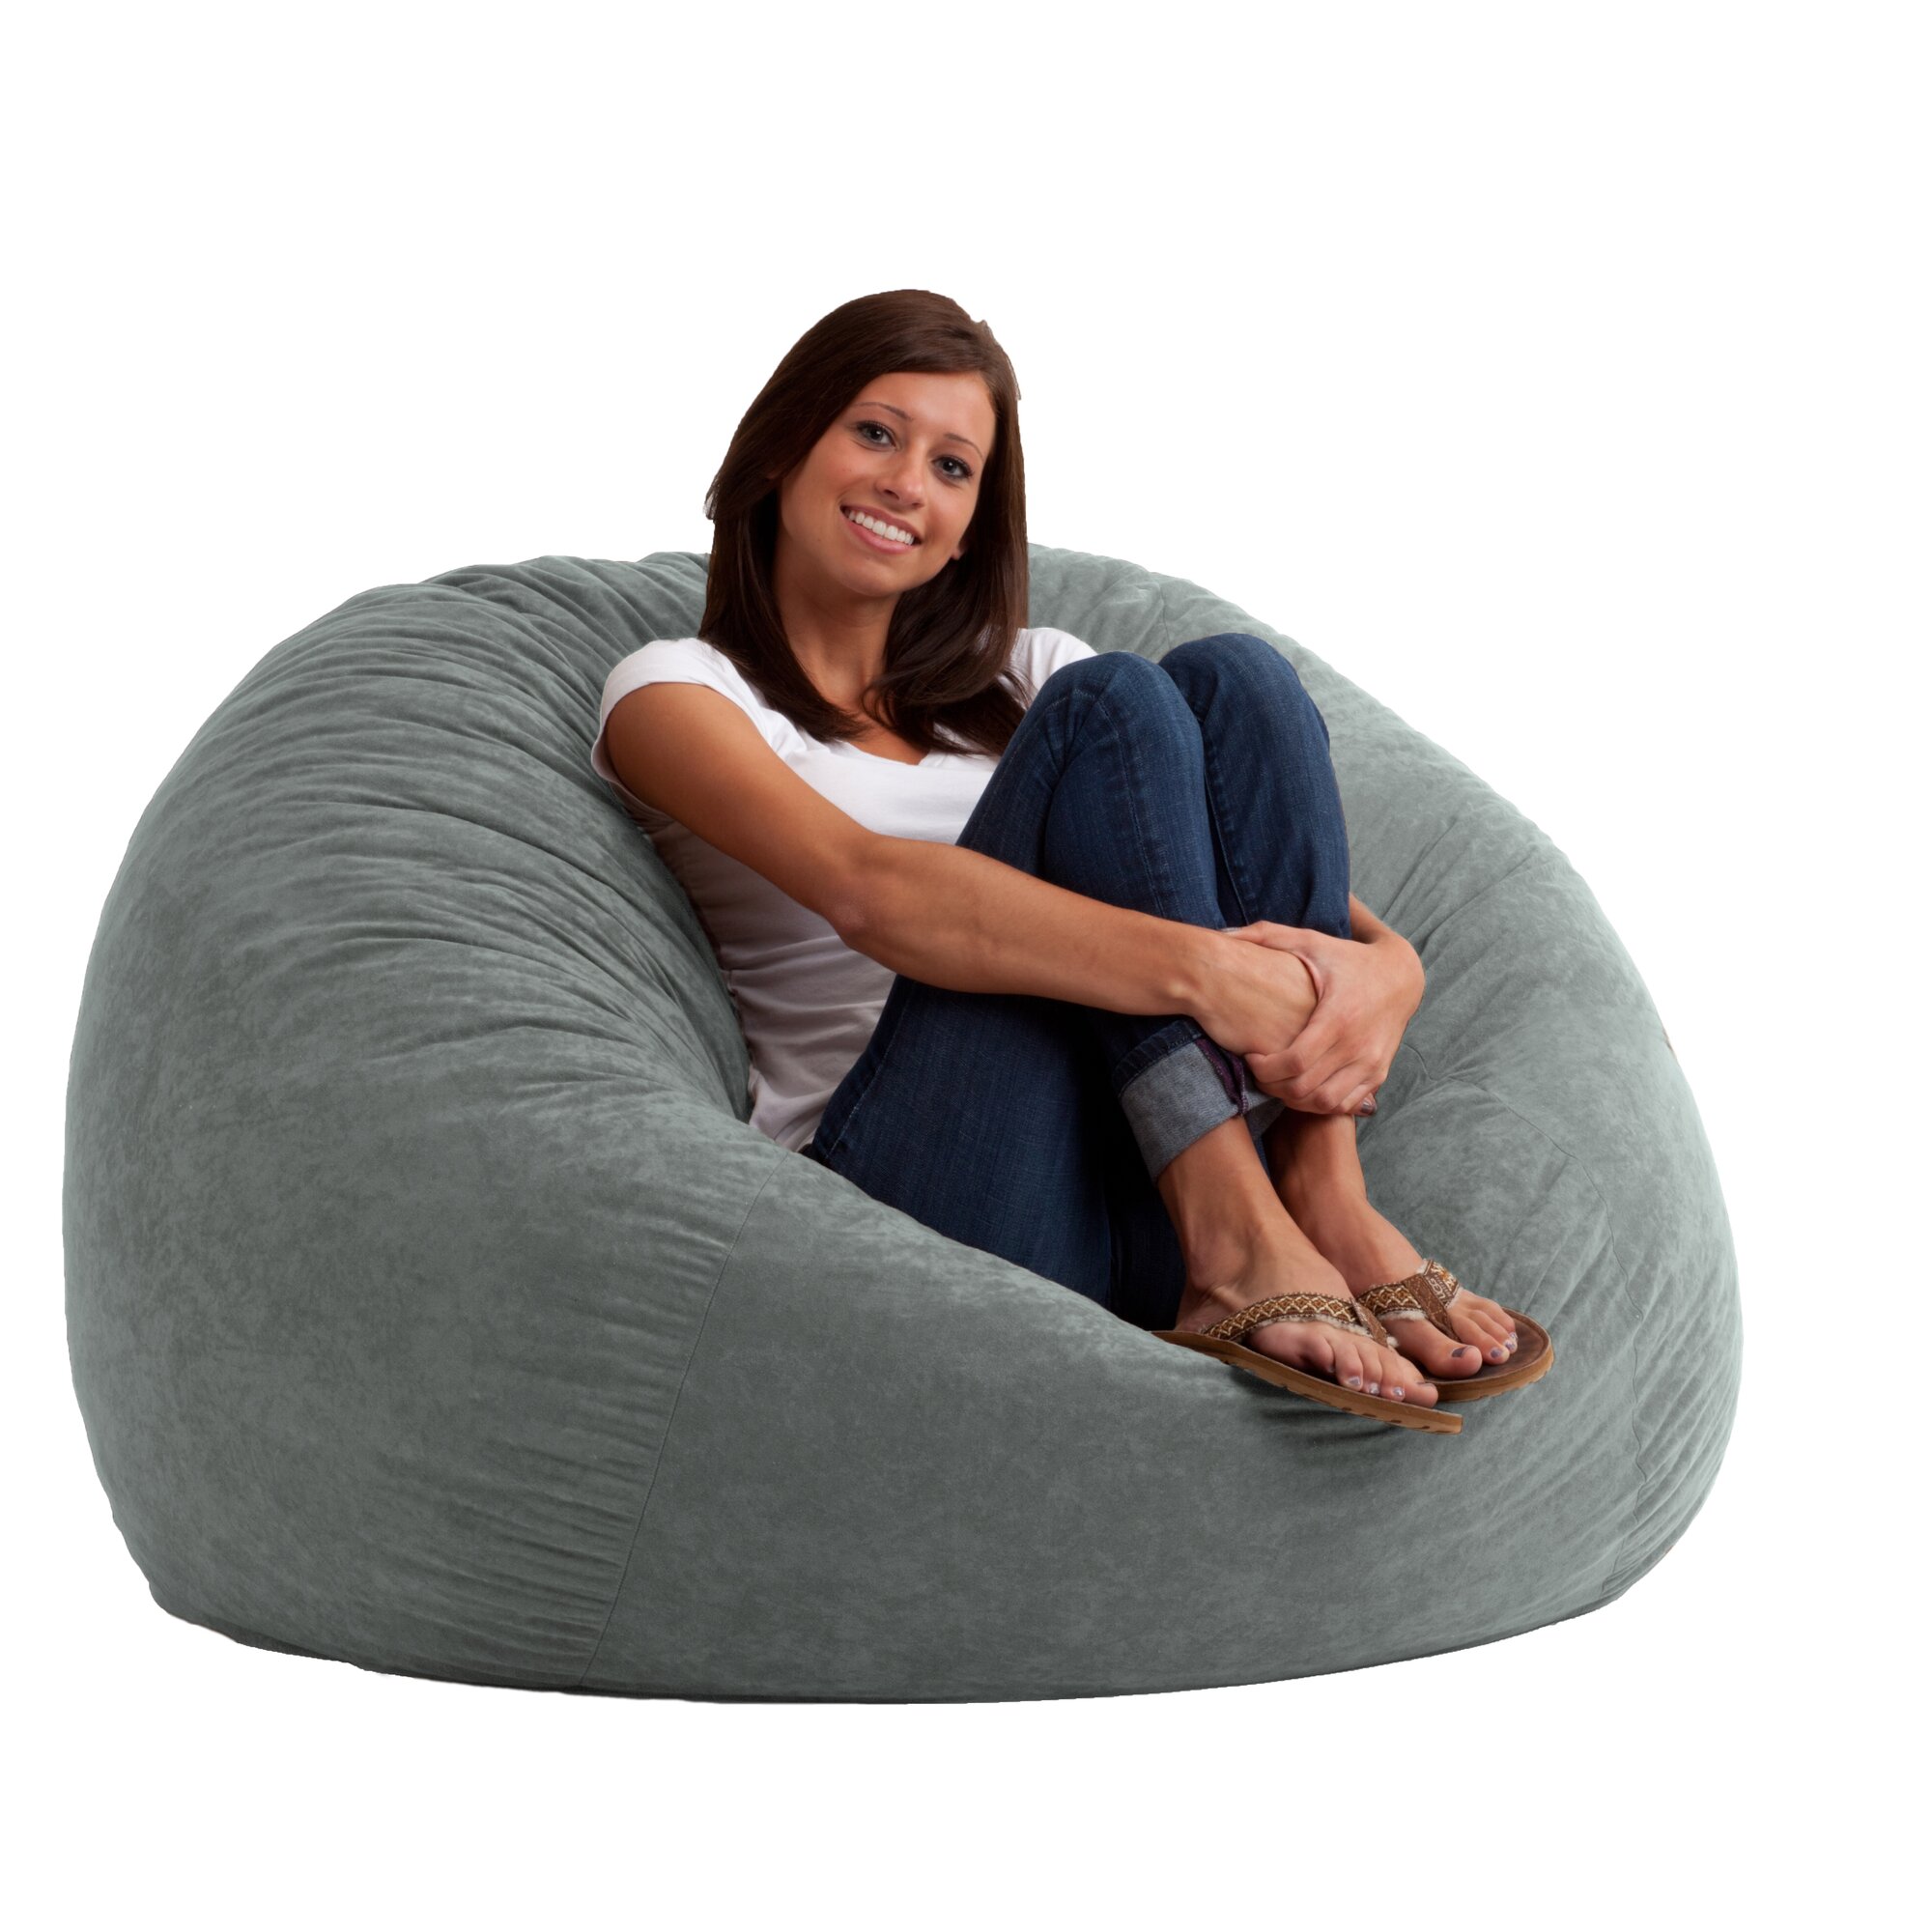 Comfort Research Fuf Bean Bag Chair & Reviews | Wayfair